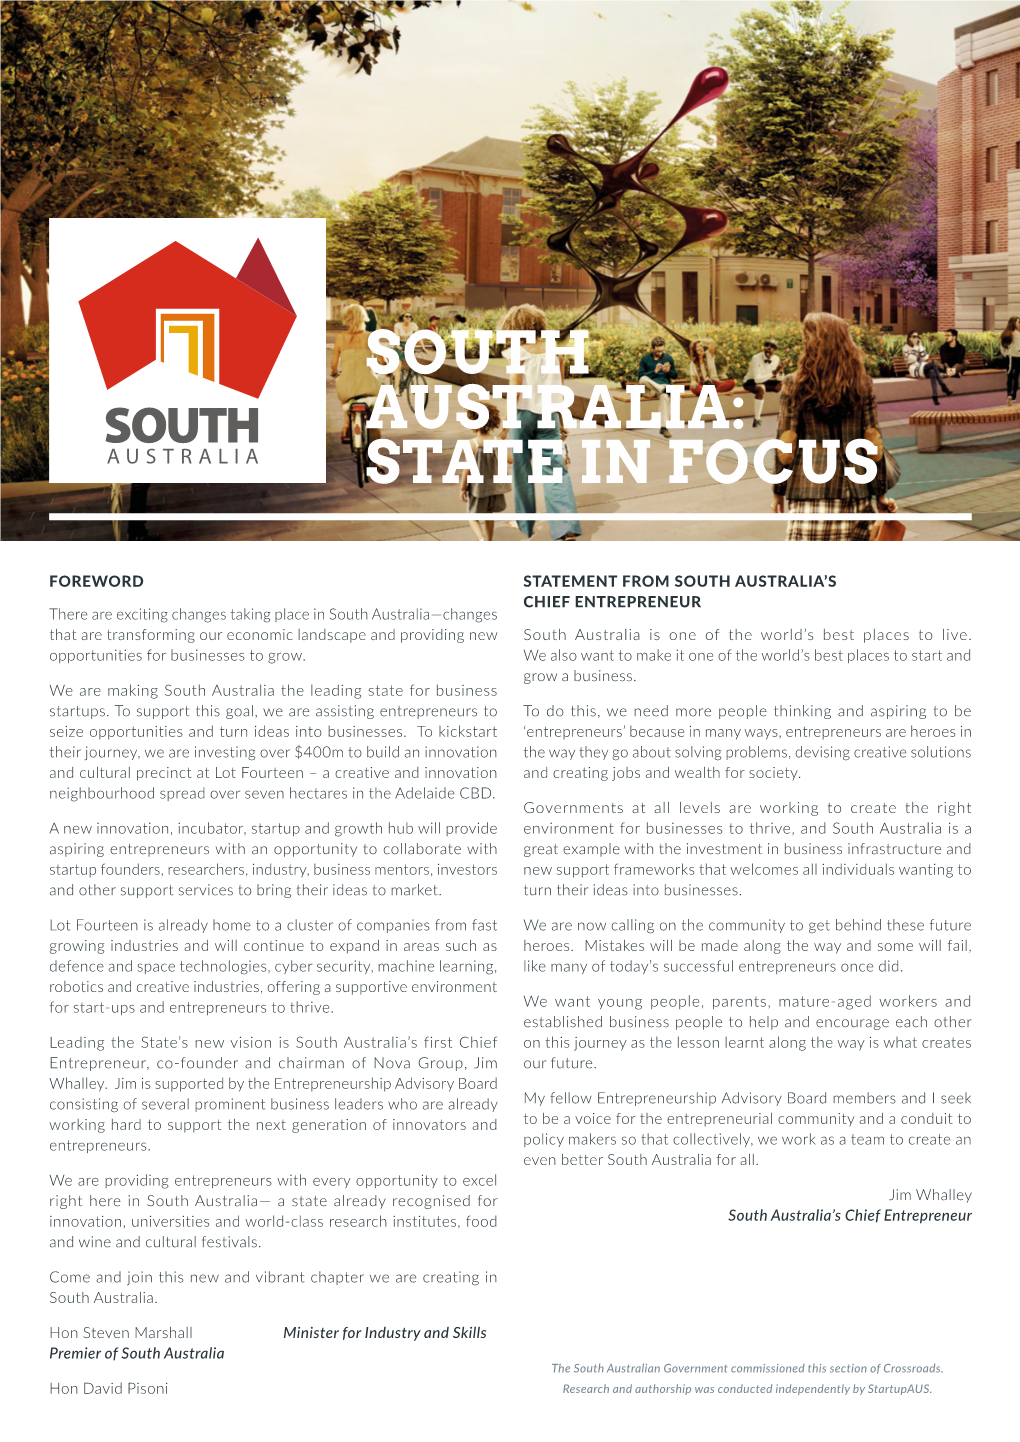 South Australia: State in Focus